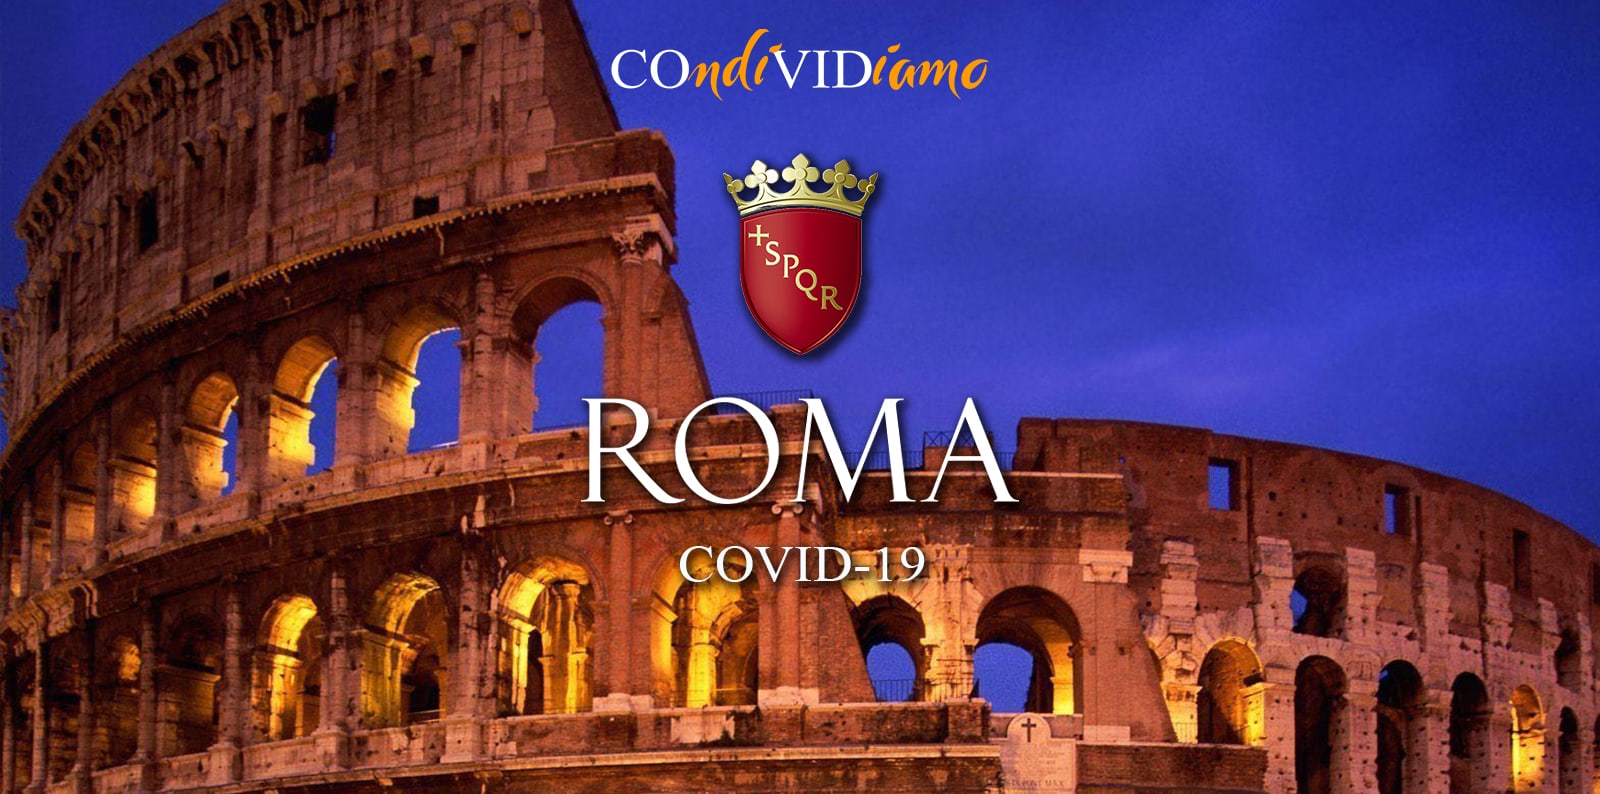 ROMA - COVID19